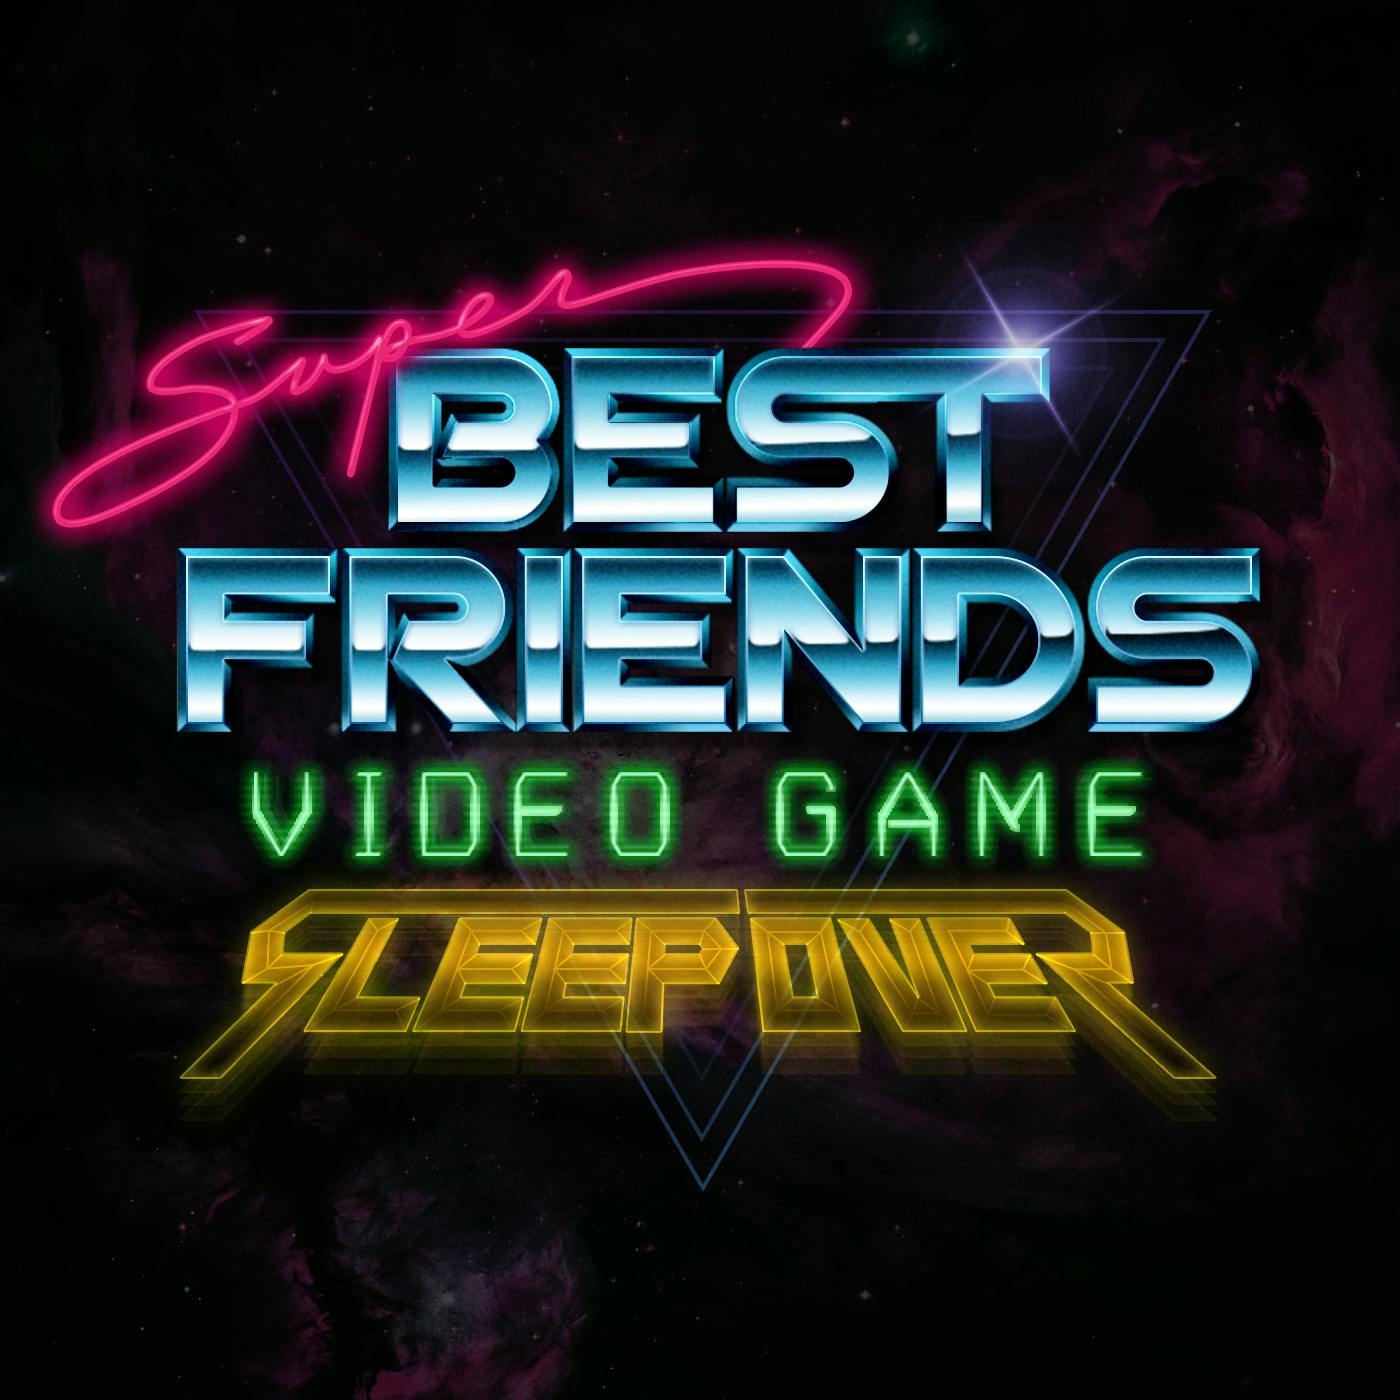 Super Best Friends Video Game Sleepover - Episode 54